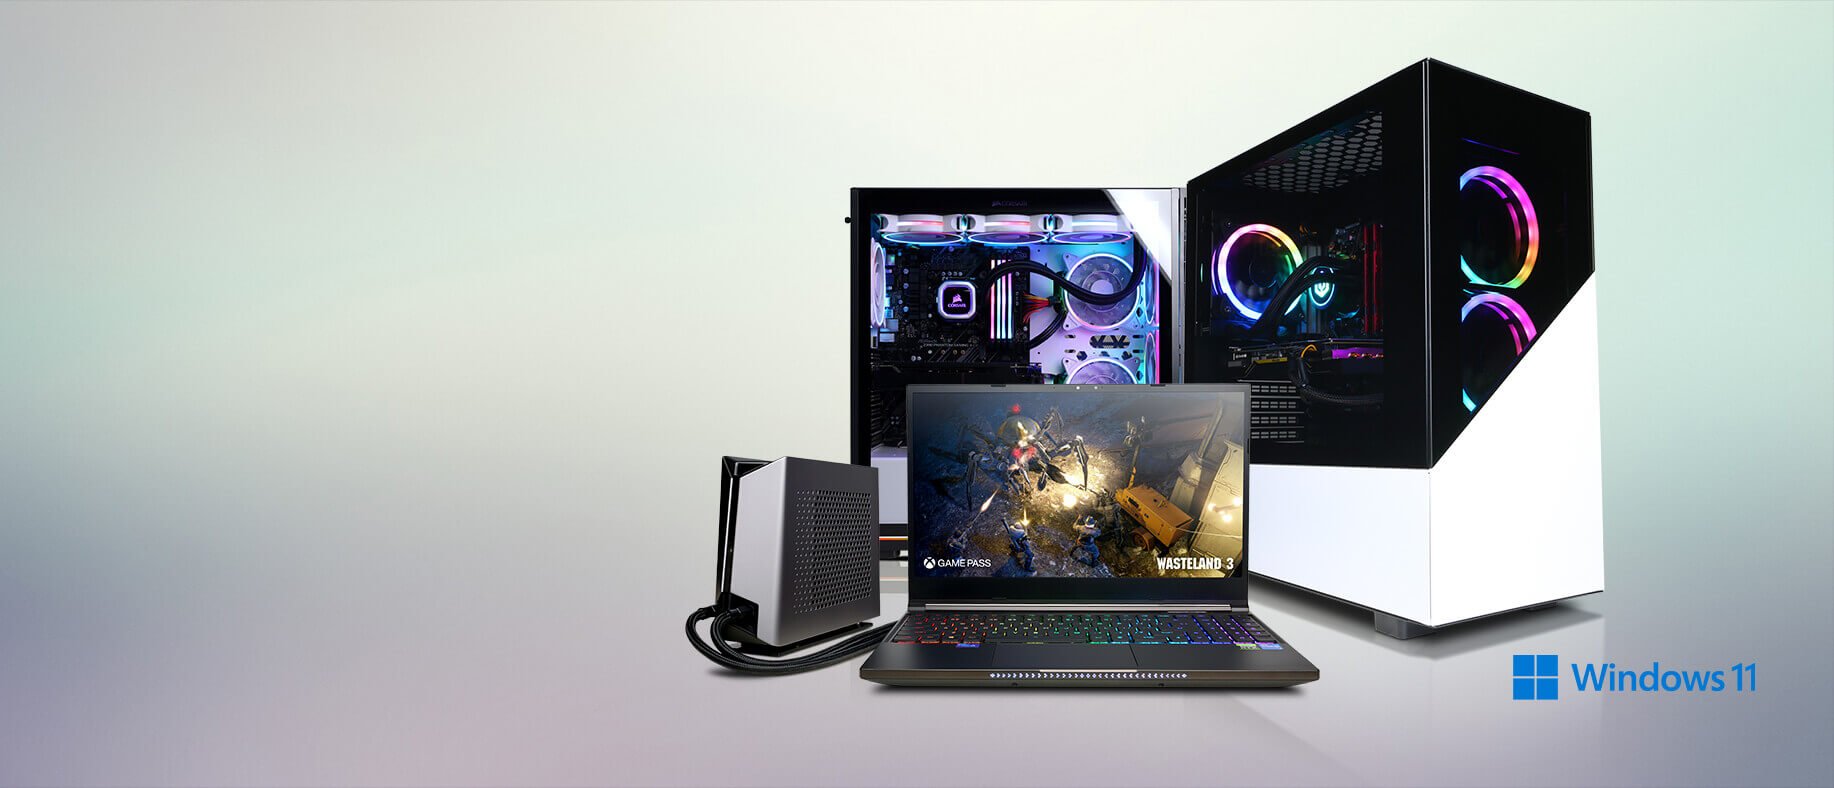 Dovenskab Hr blåhval Custom PC Builder | Gaming Desktops & Laptops | CyberPowerPC